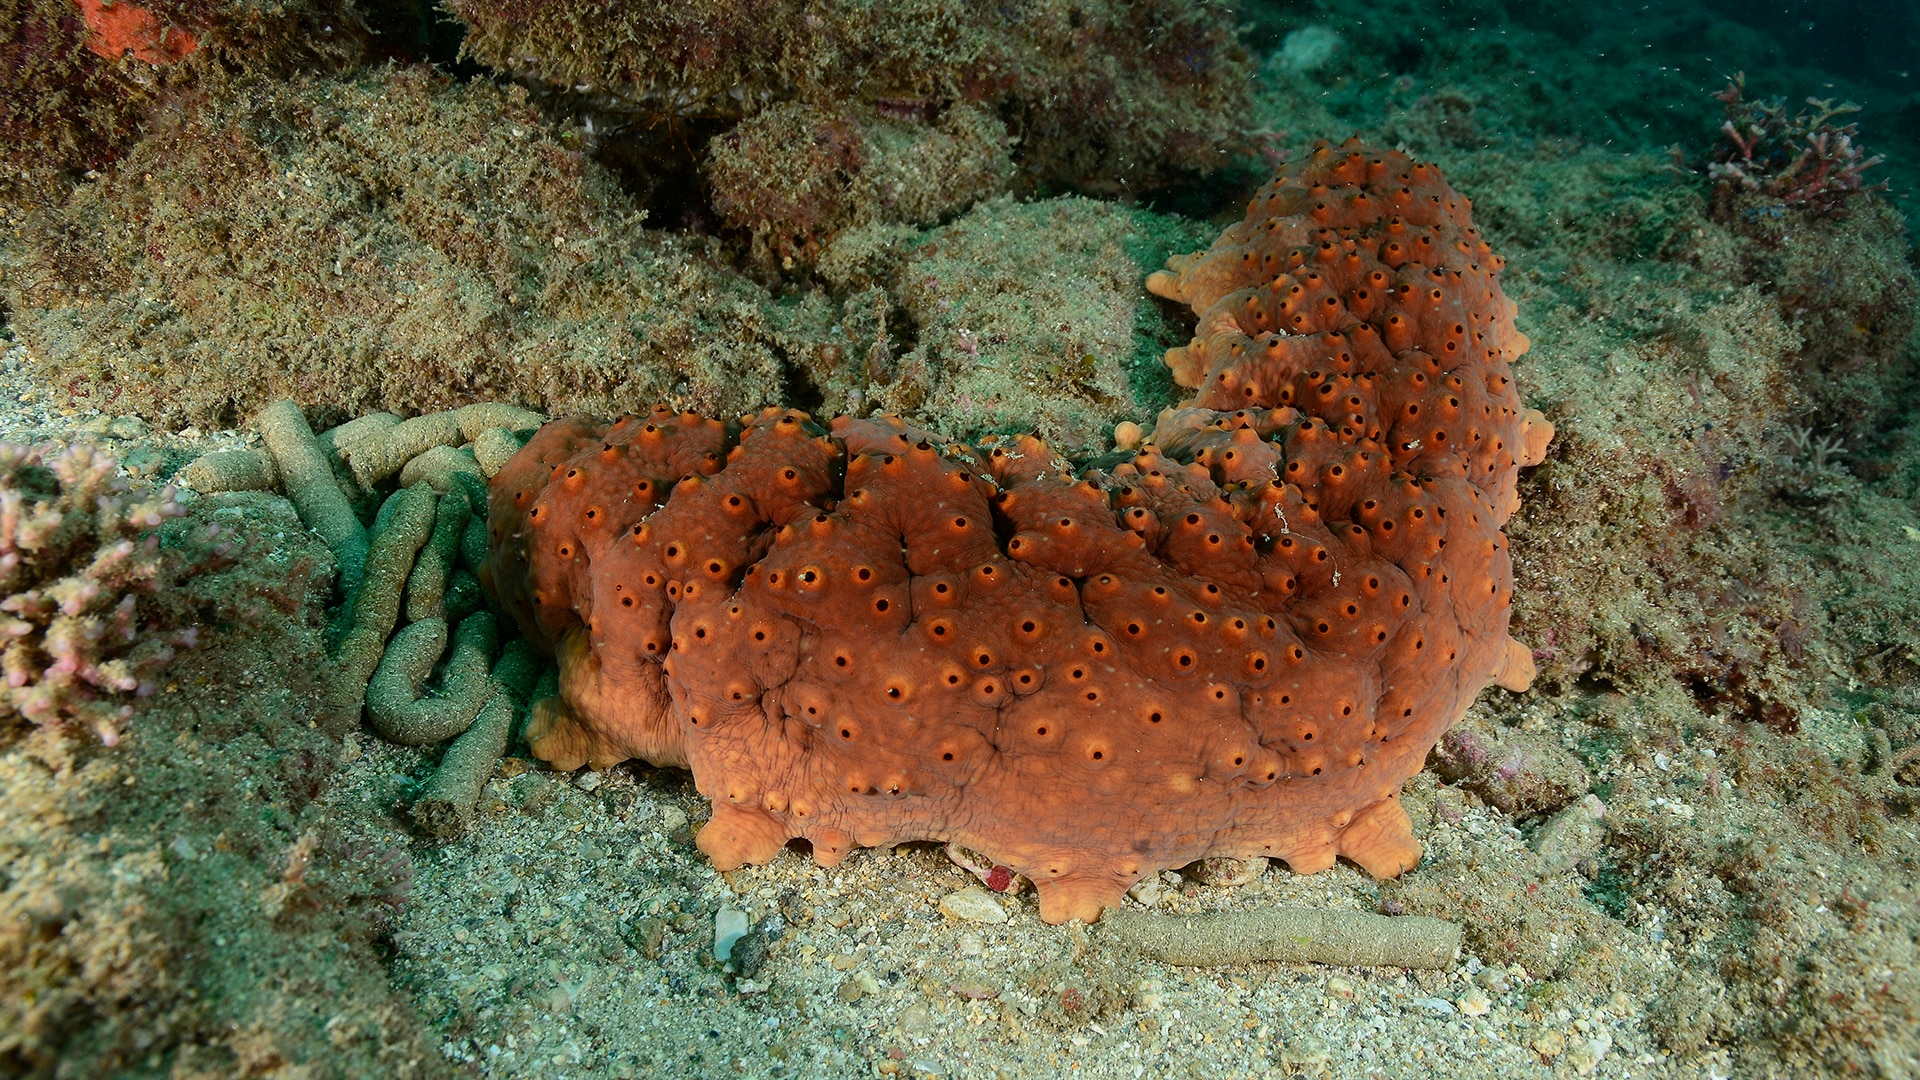 Red sea cucumber on the ocean floor